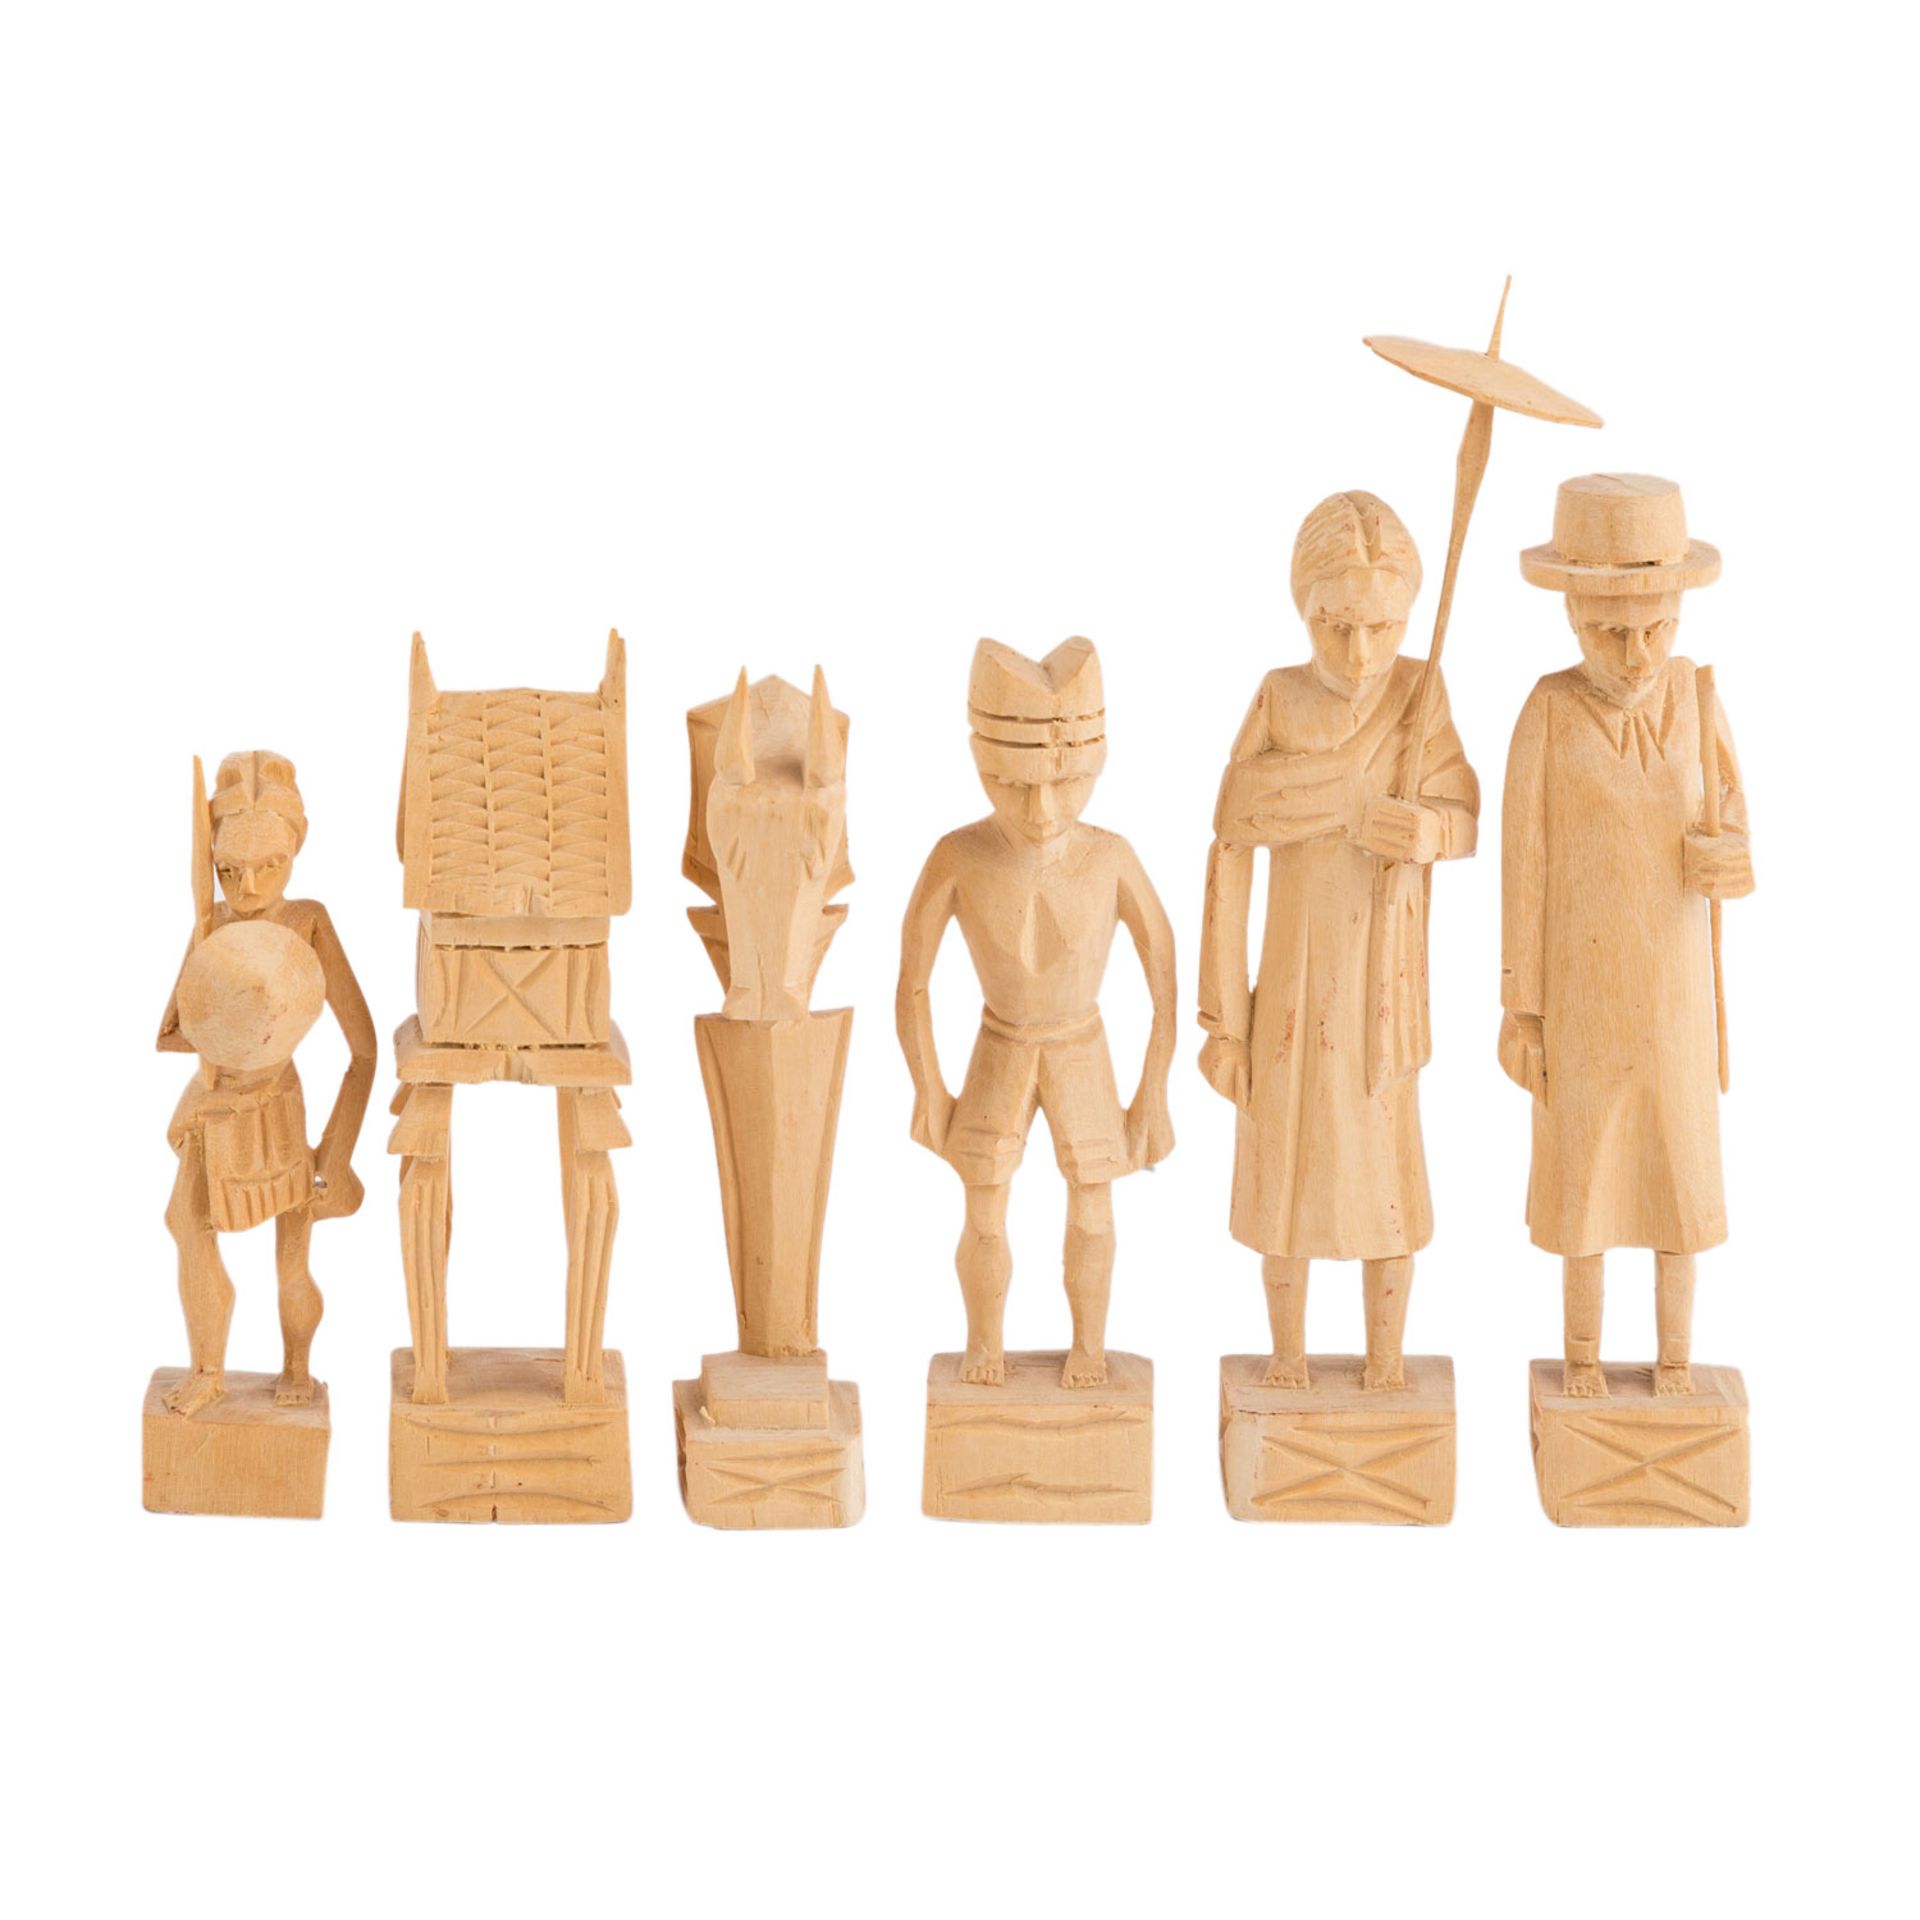 AFRIKANISCHER SCHACHFIGURENSATZGeschnitzte Figuren aus Eben- bzw. Tropenholz. Figurenhöhe bis 15 cm. - Bild 2 aus 3